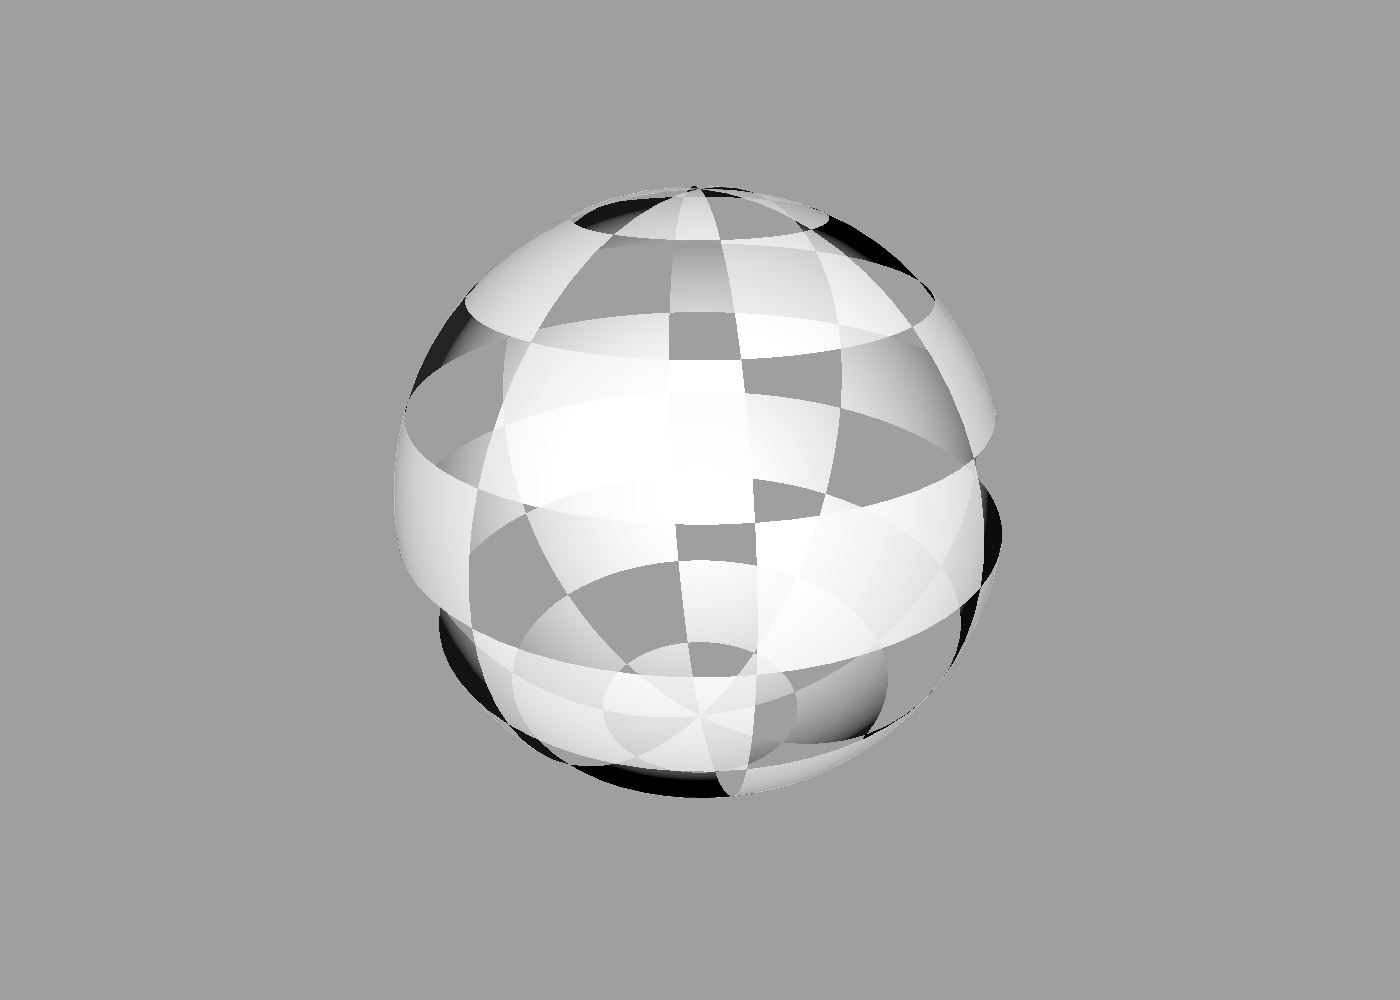 Checkered transparent sphere